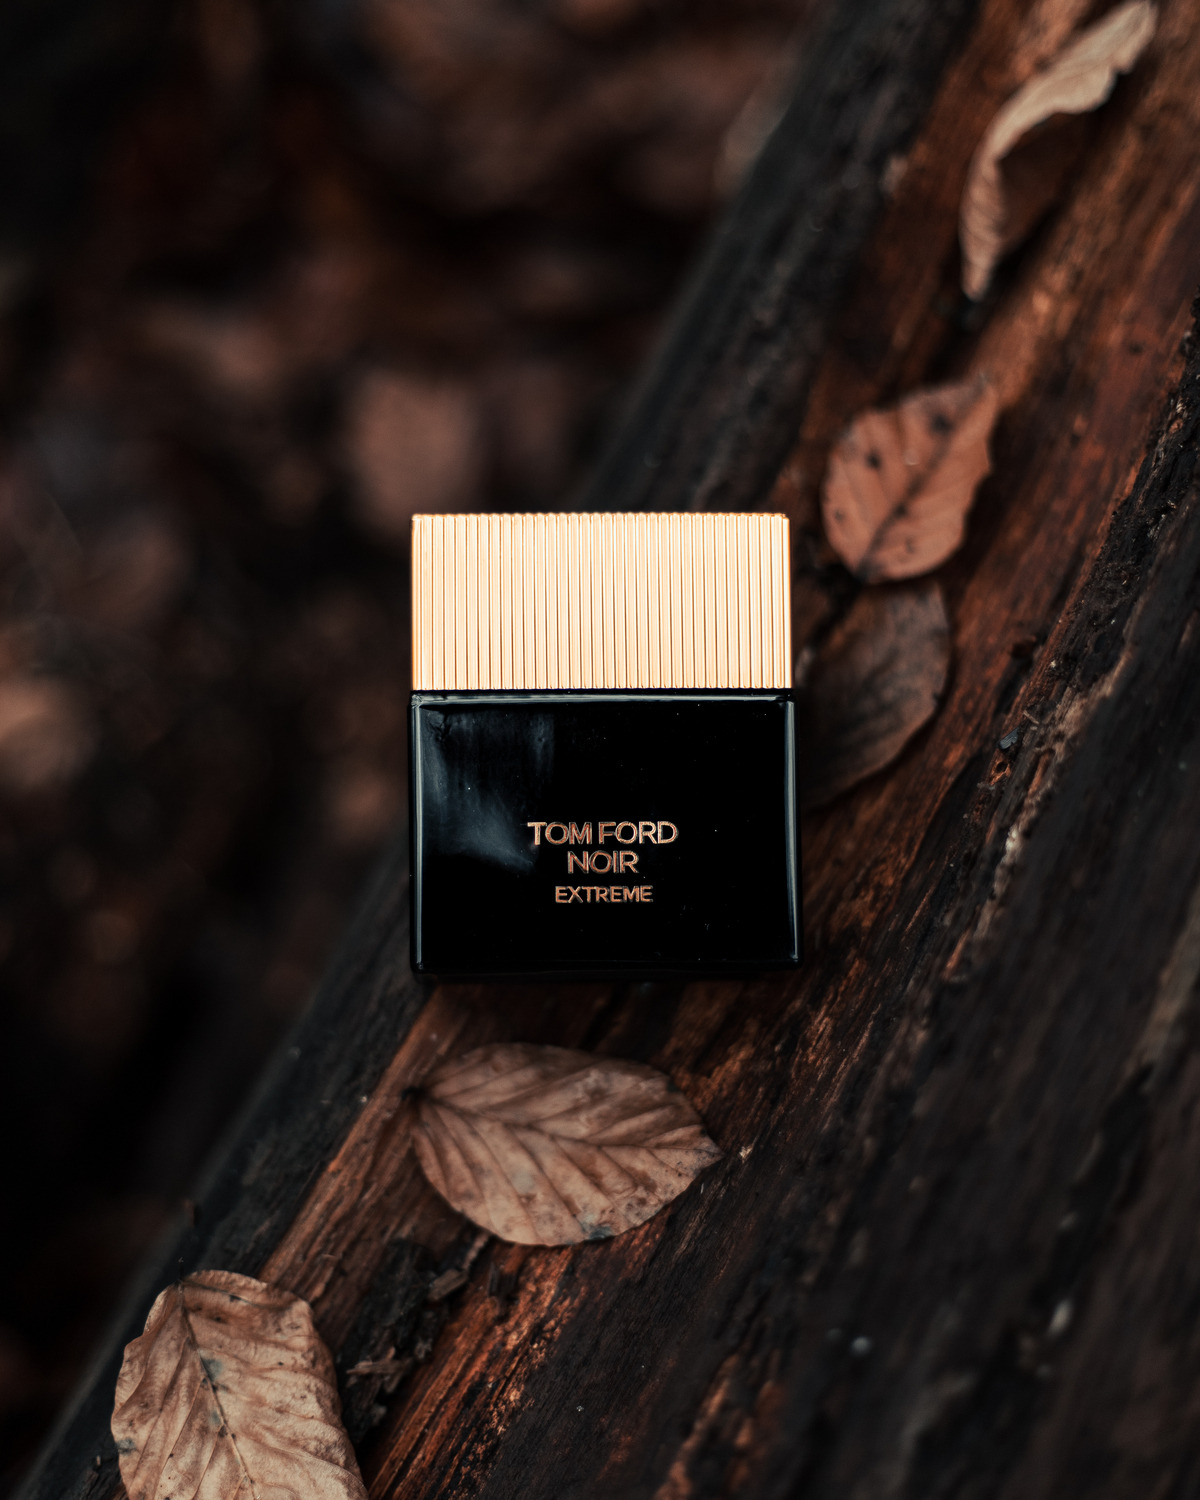 Tom Ford Noir Extreme | Honest Fragrance Review - Suparfum